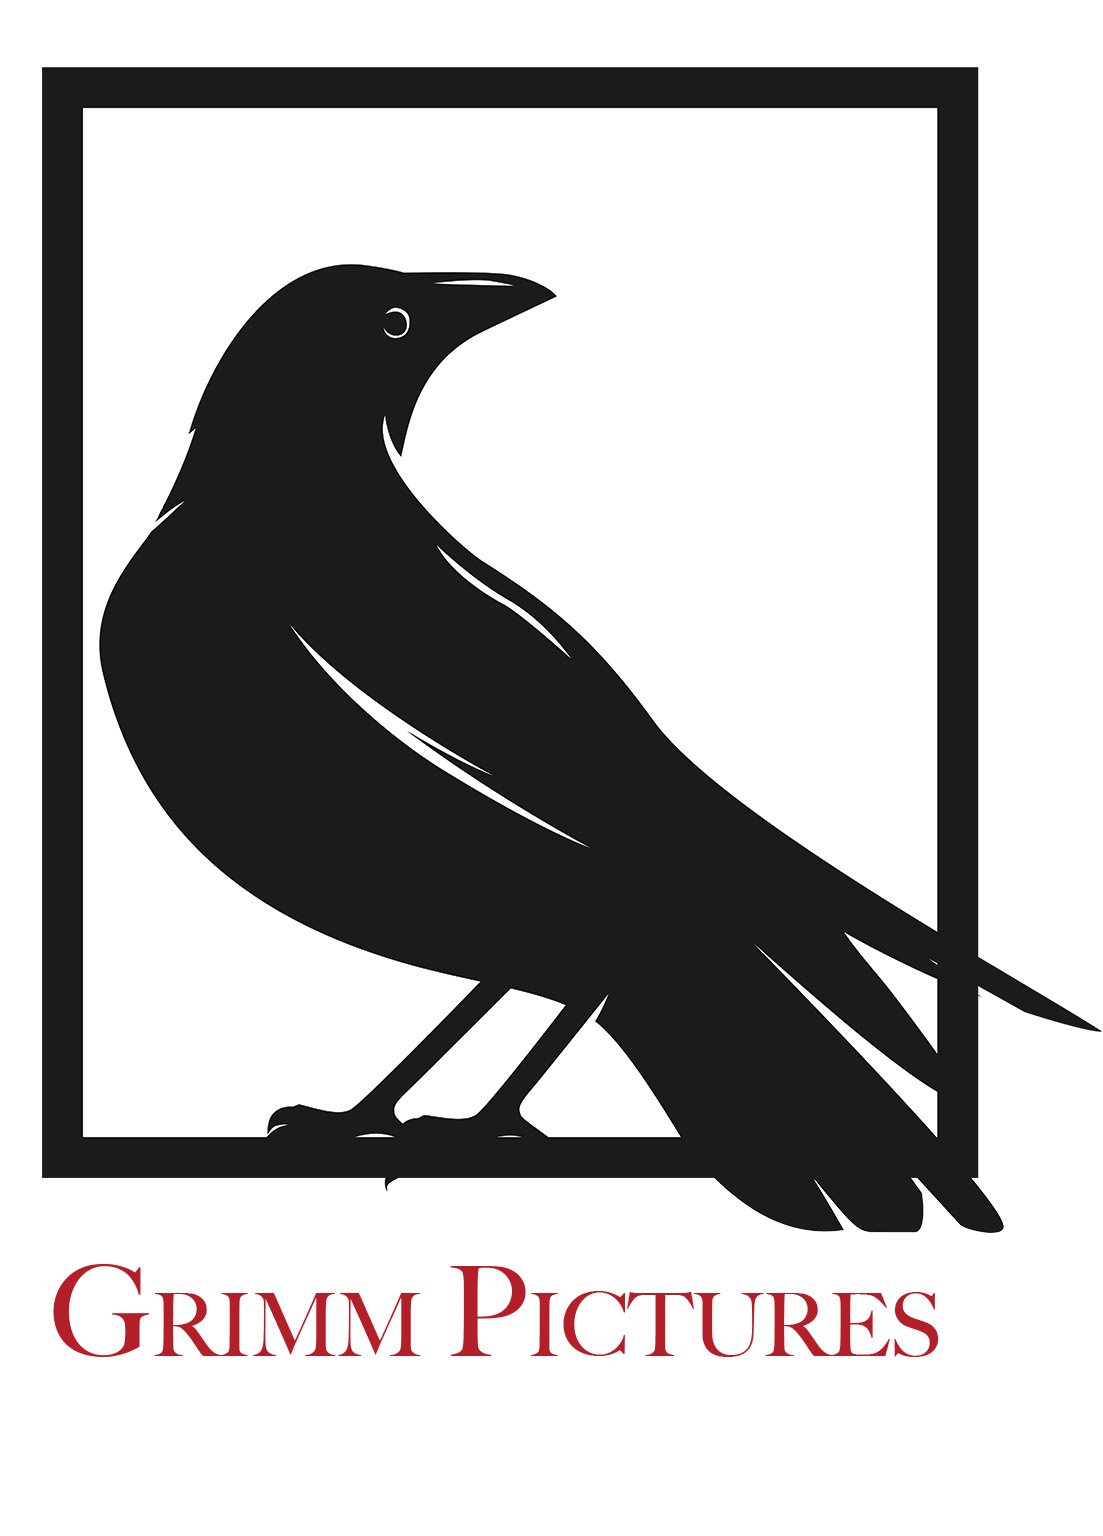 Grimm Pictures Ltd.